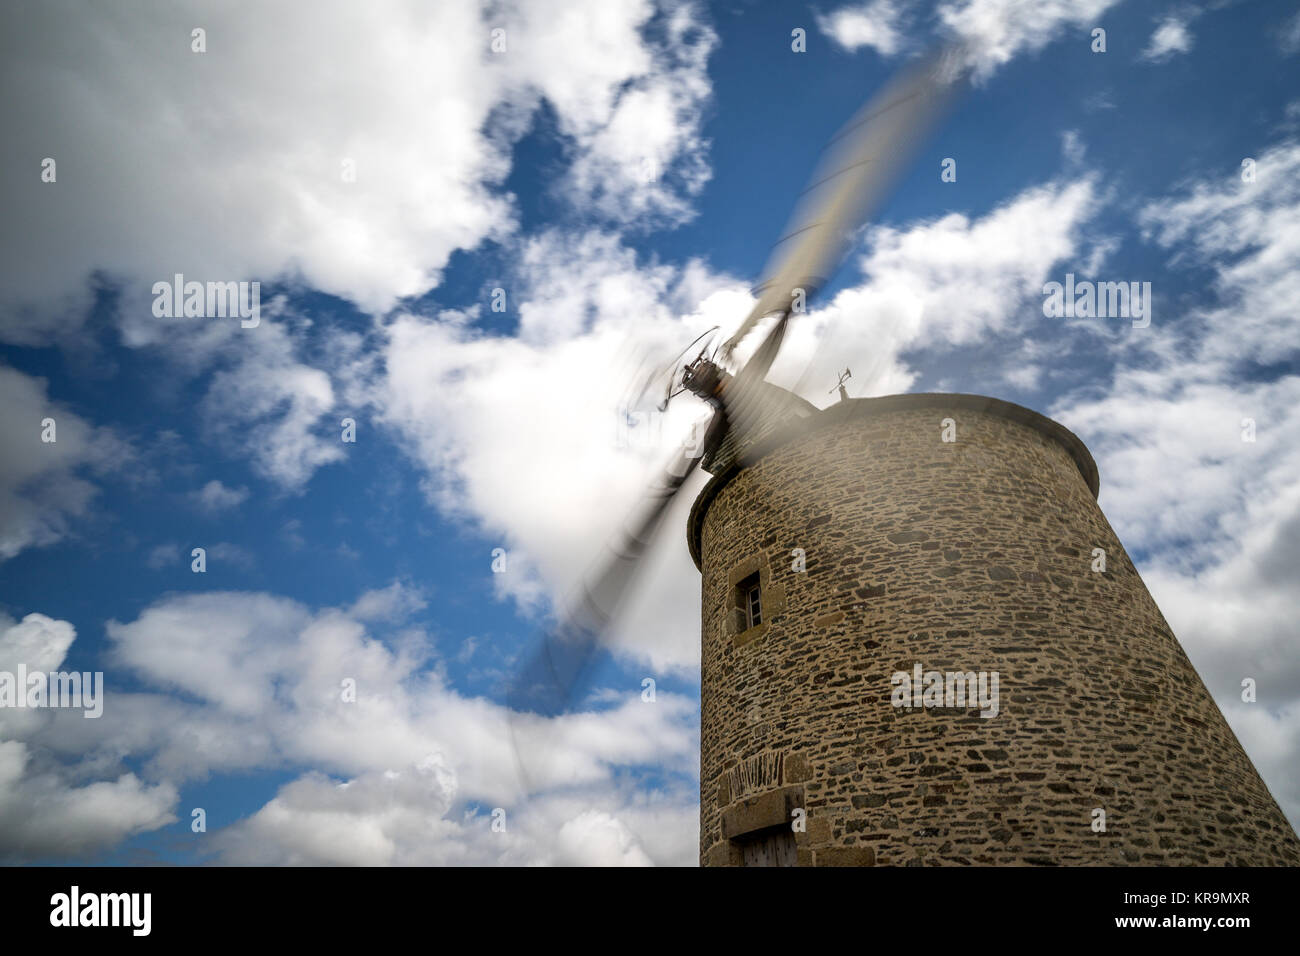 Windmühle, Getreide, Felder, historisch, Korn, Wolkenhimmel, Müller Banque D'Images